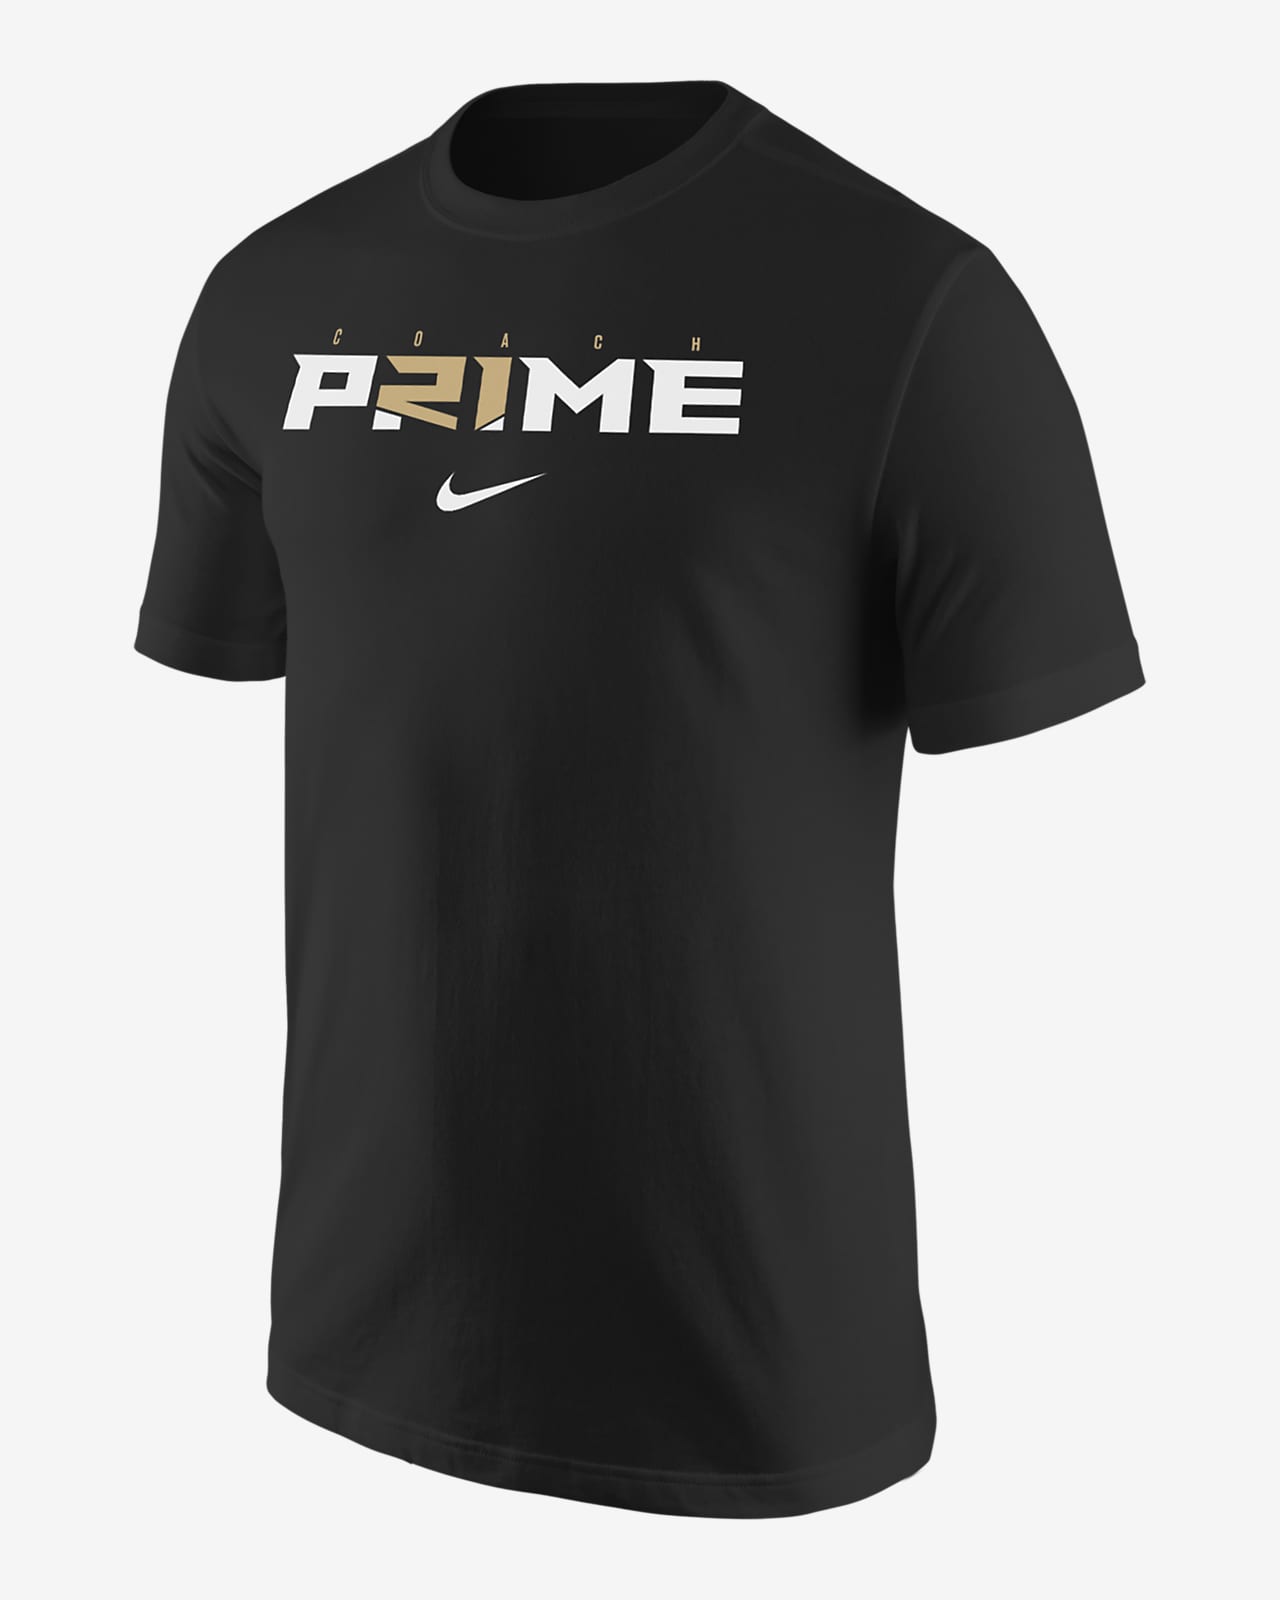 Deion Sanders "P21ME" Men's Nike T-Shirt